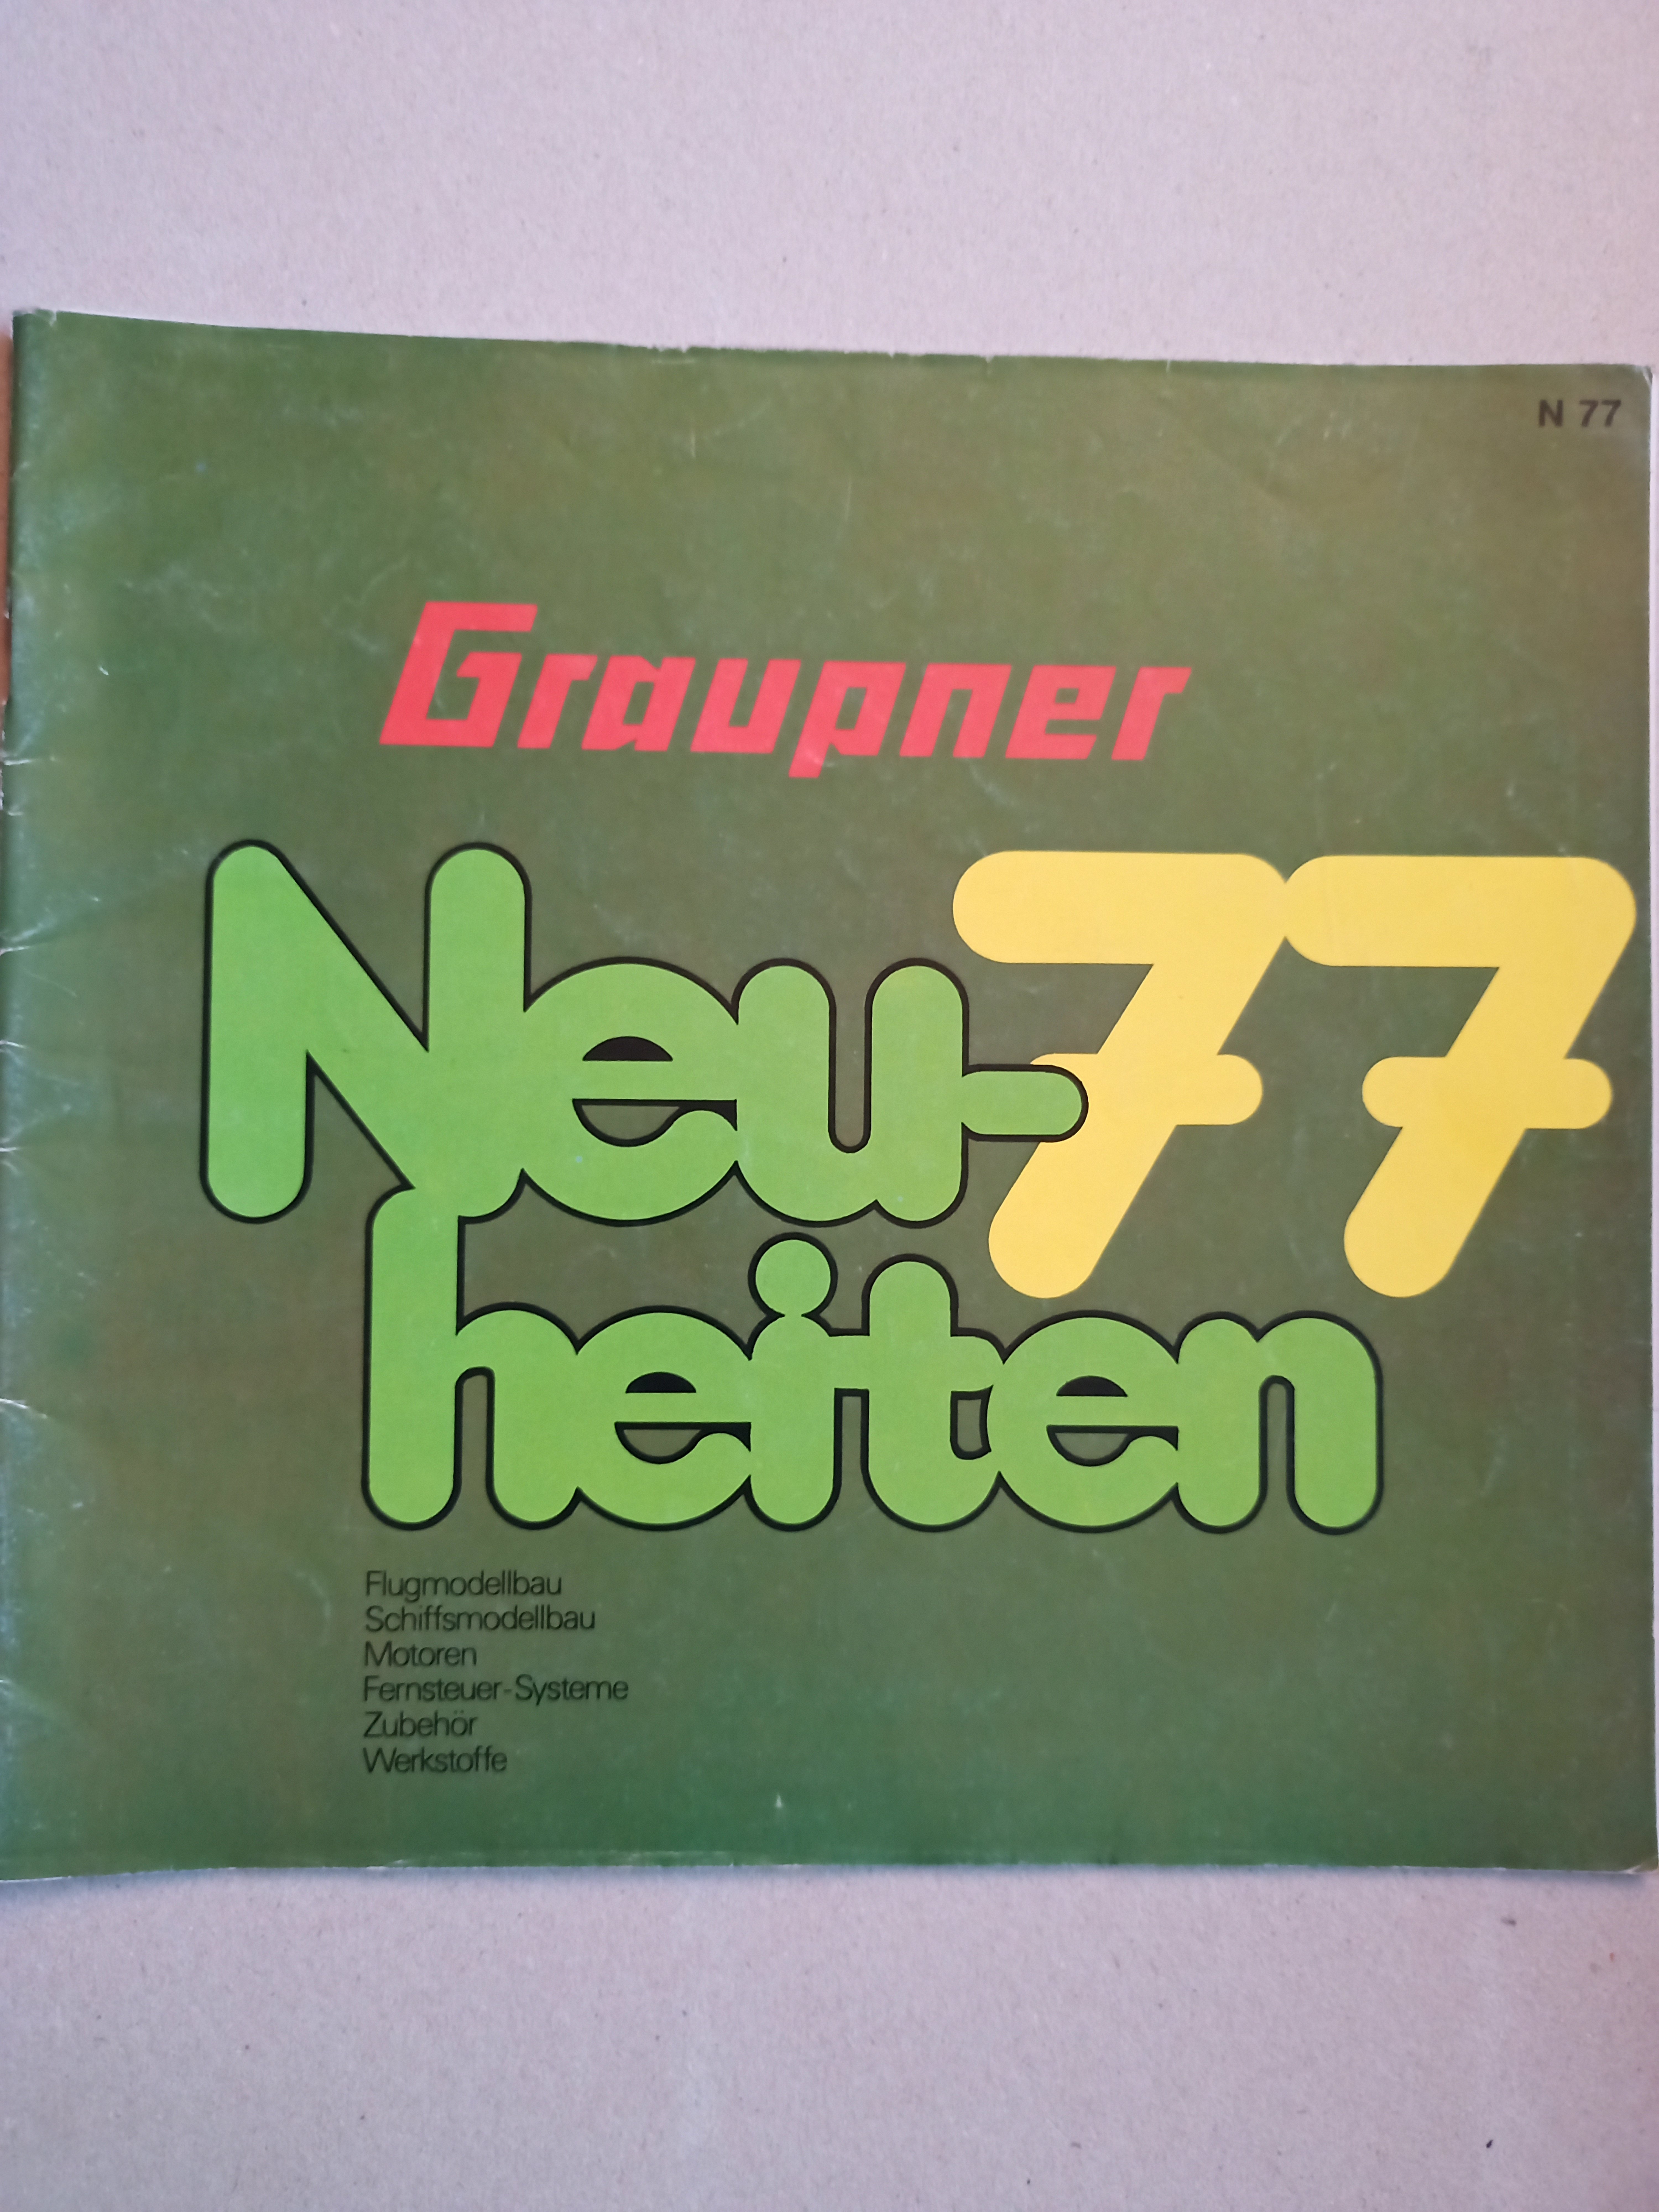 Graupner Neuheiten 1977 (Deutsches Segelflugmuseum mit Modellflug CC BY-NC-SA)